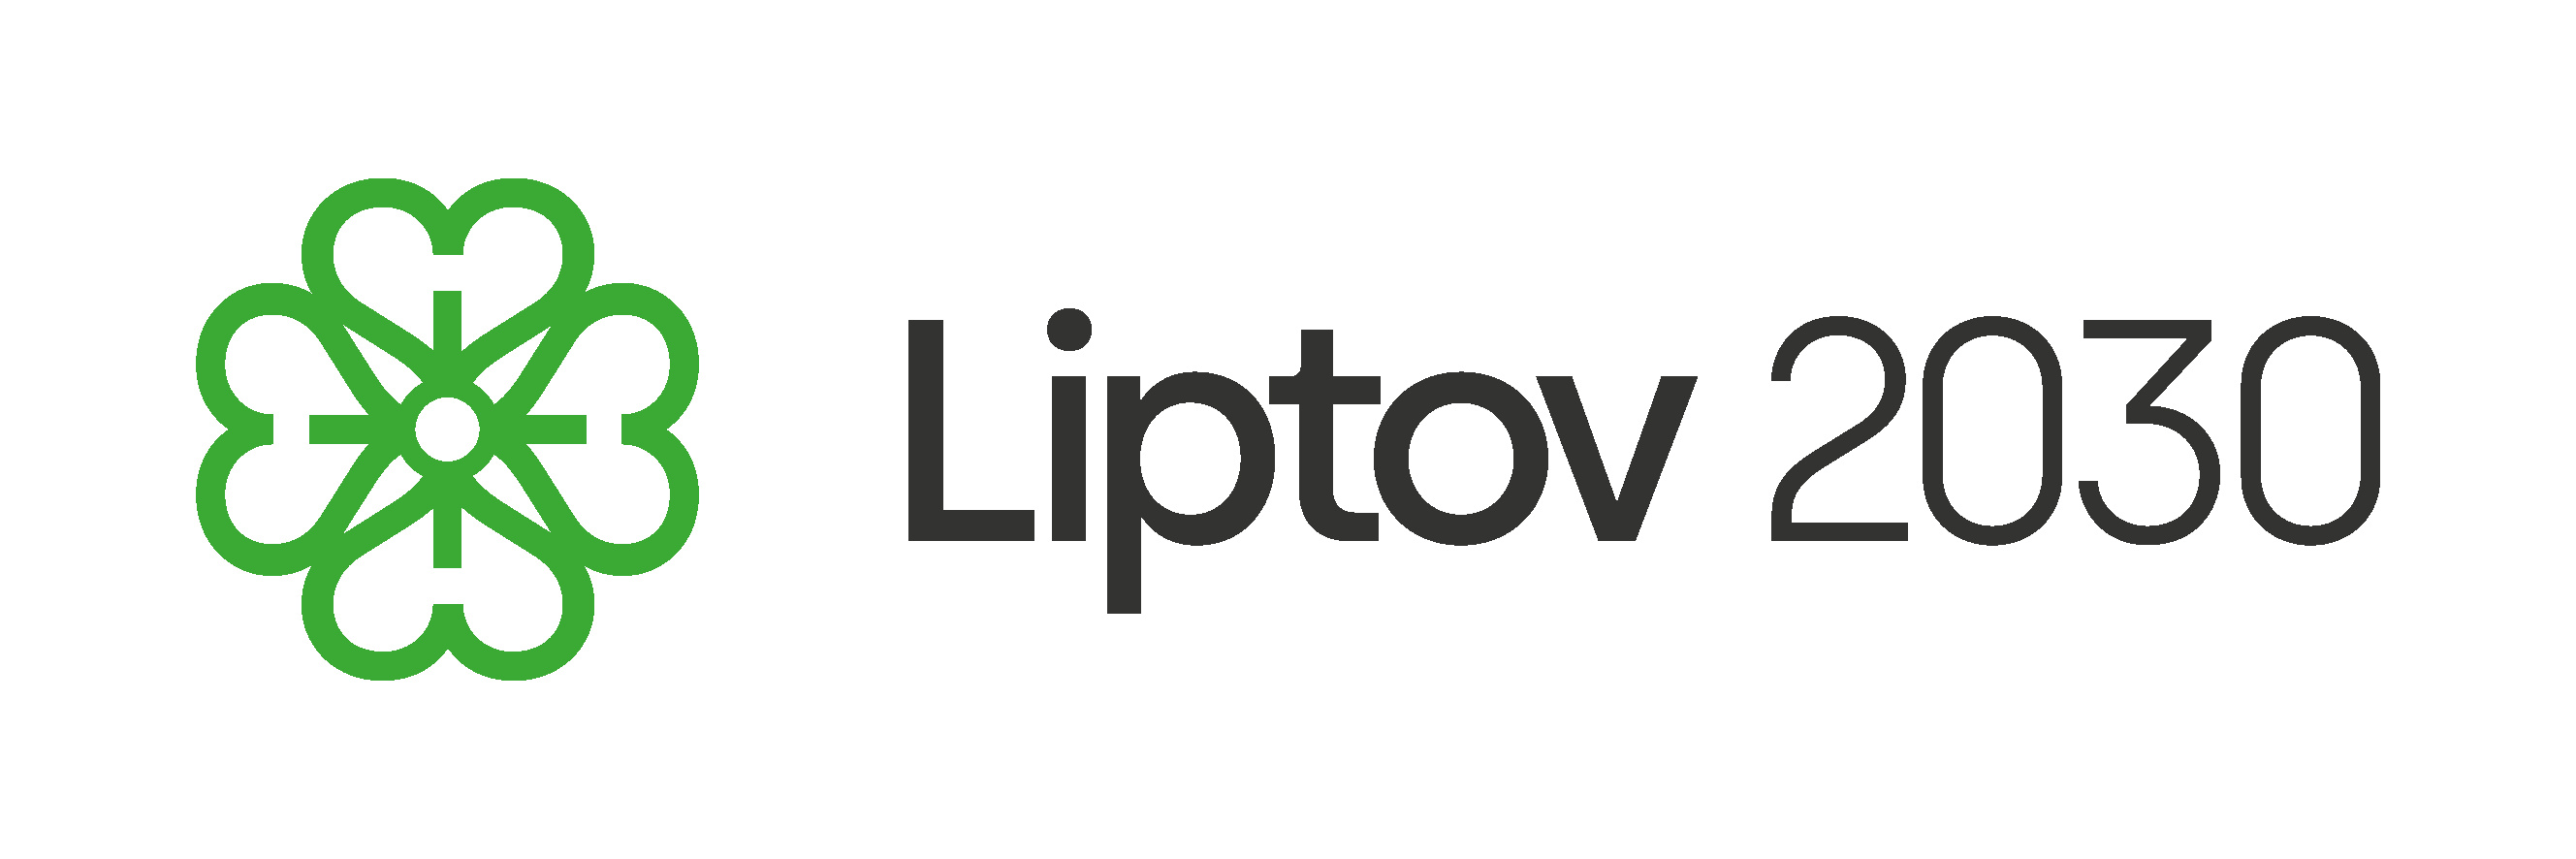 banner-liptov